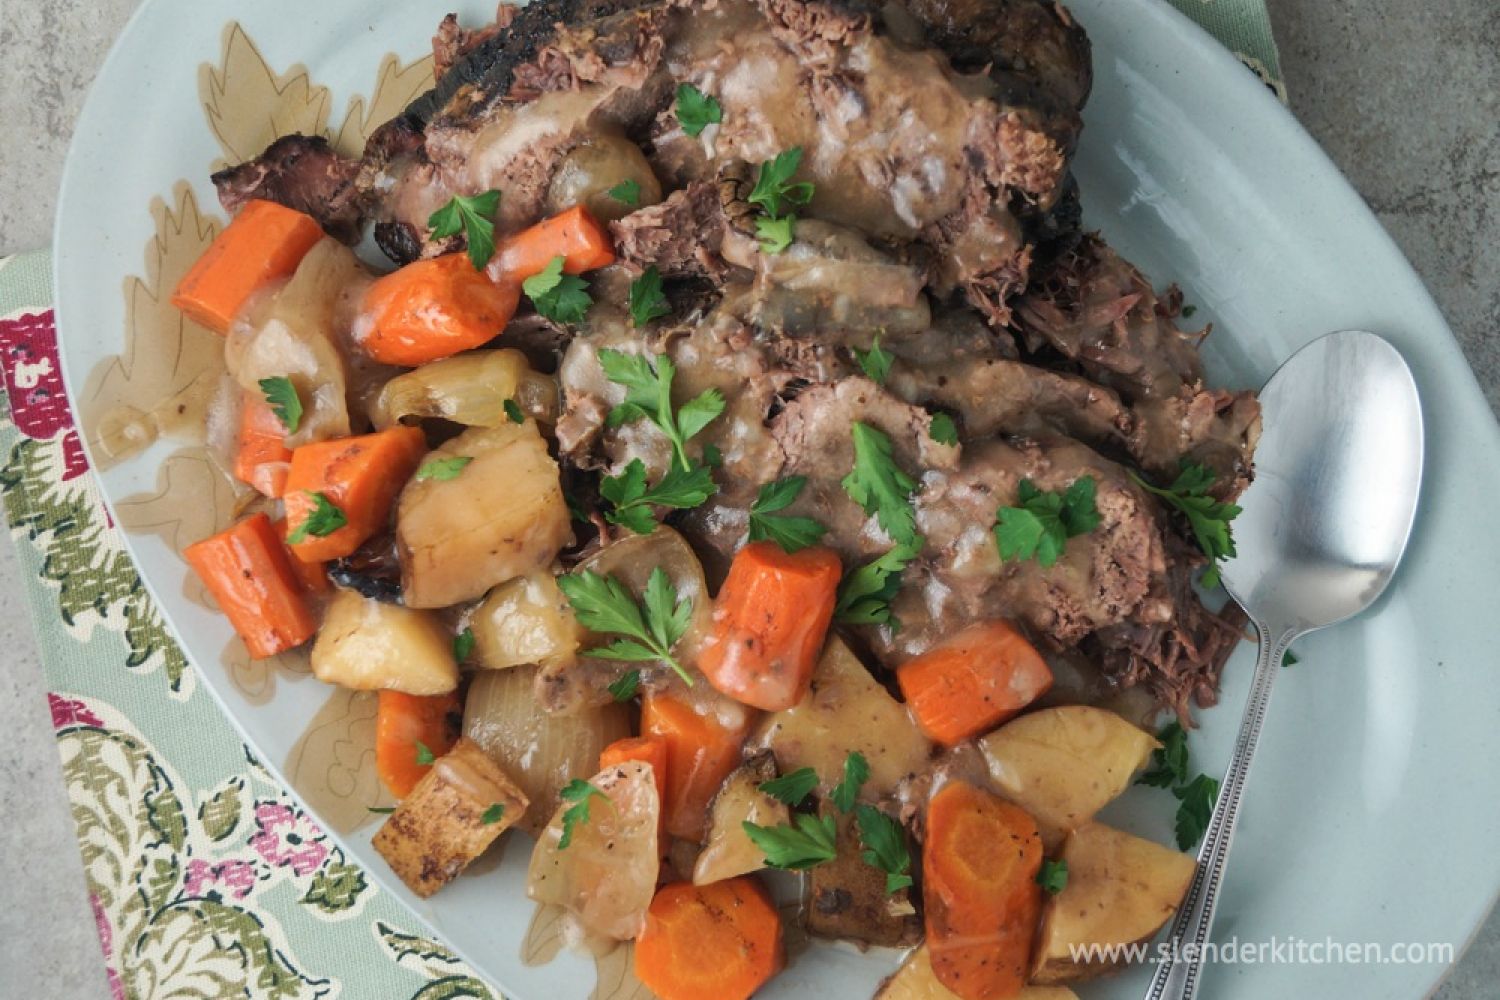 Sunday Slow Cooker: Pot Roast and Potatoes